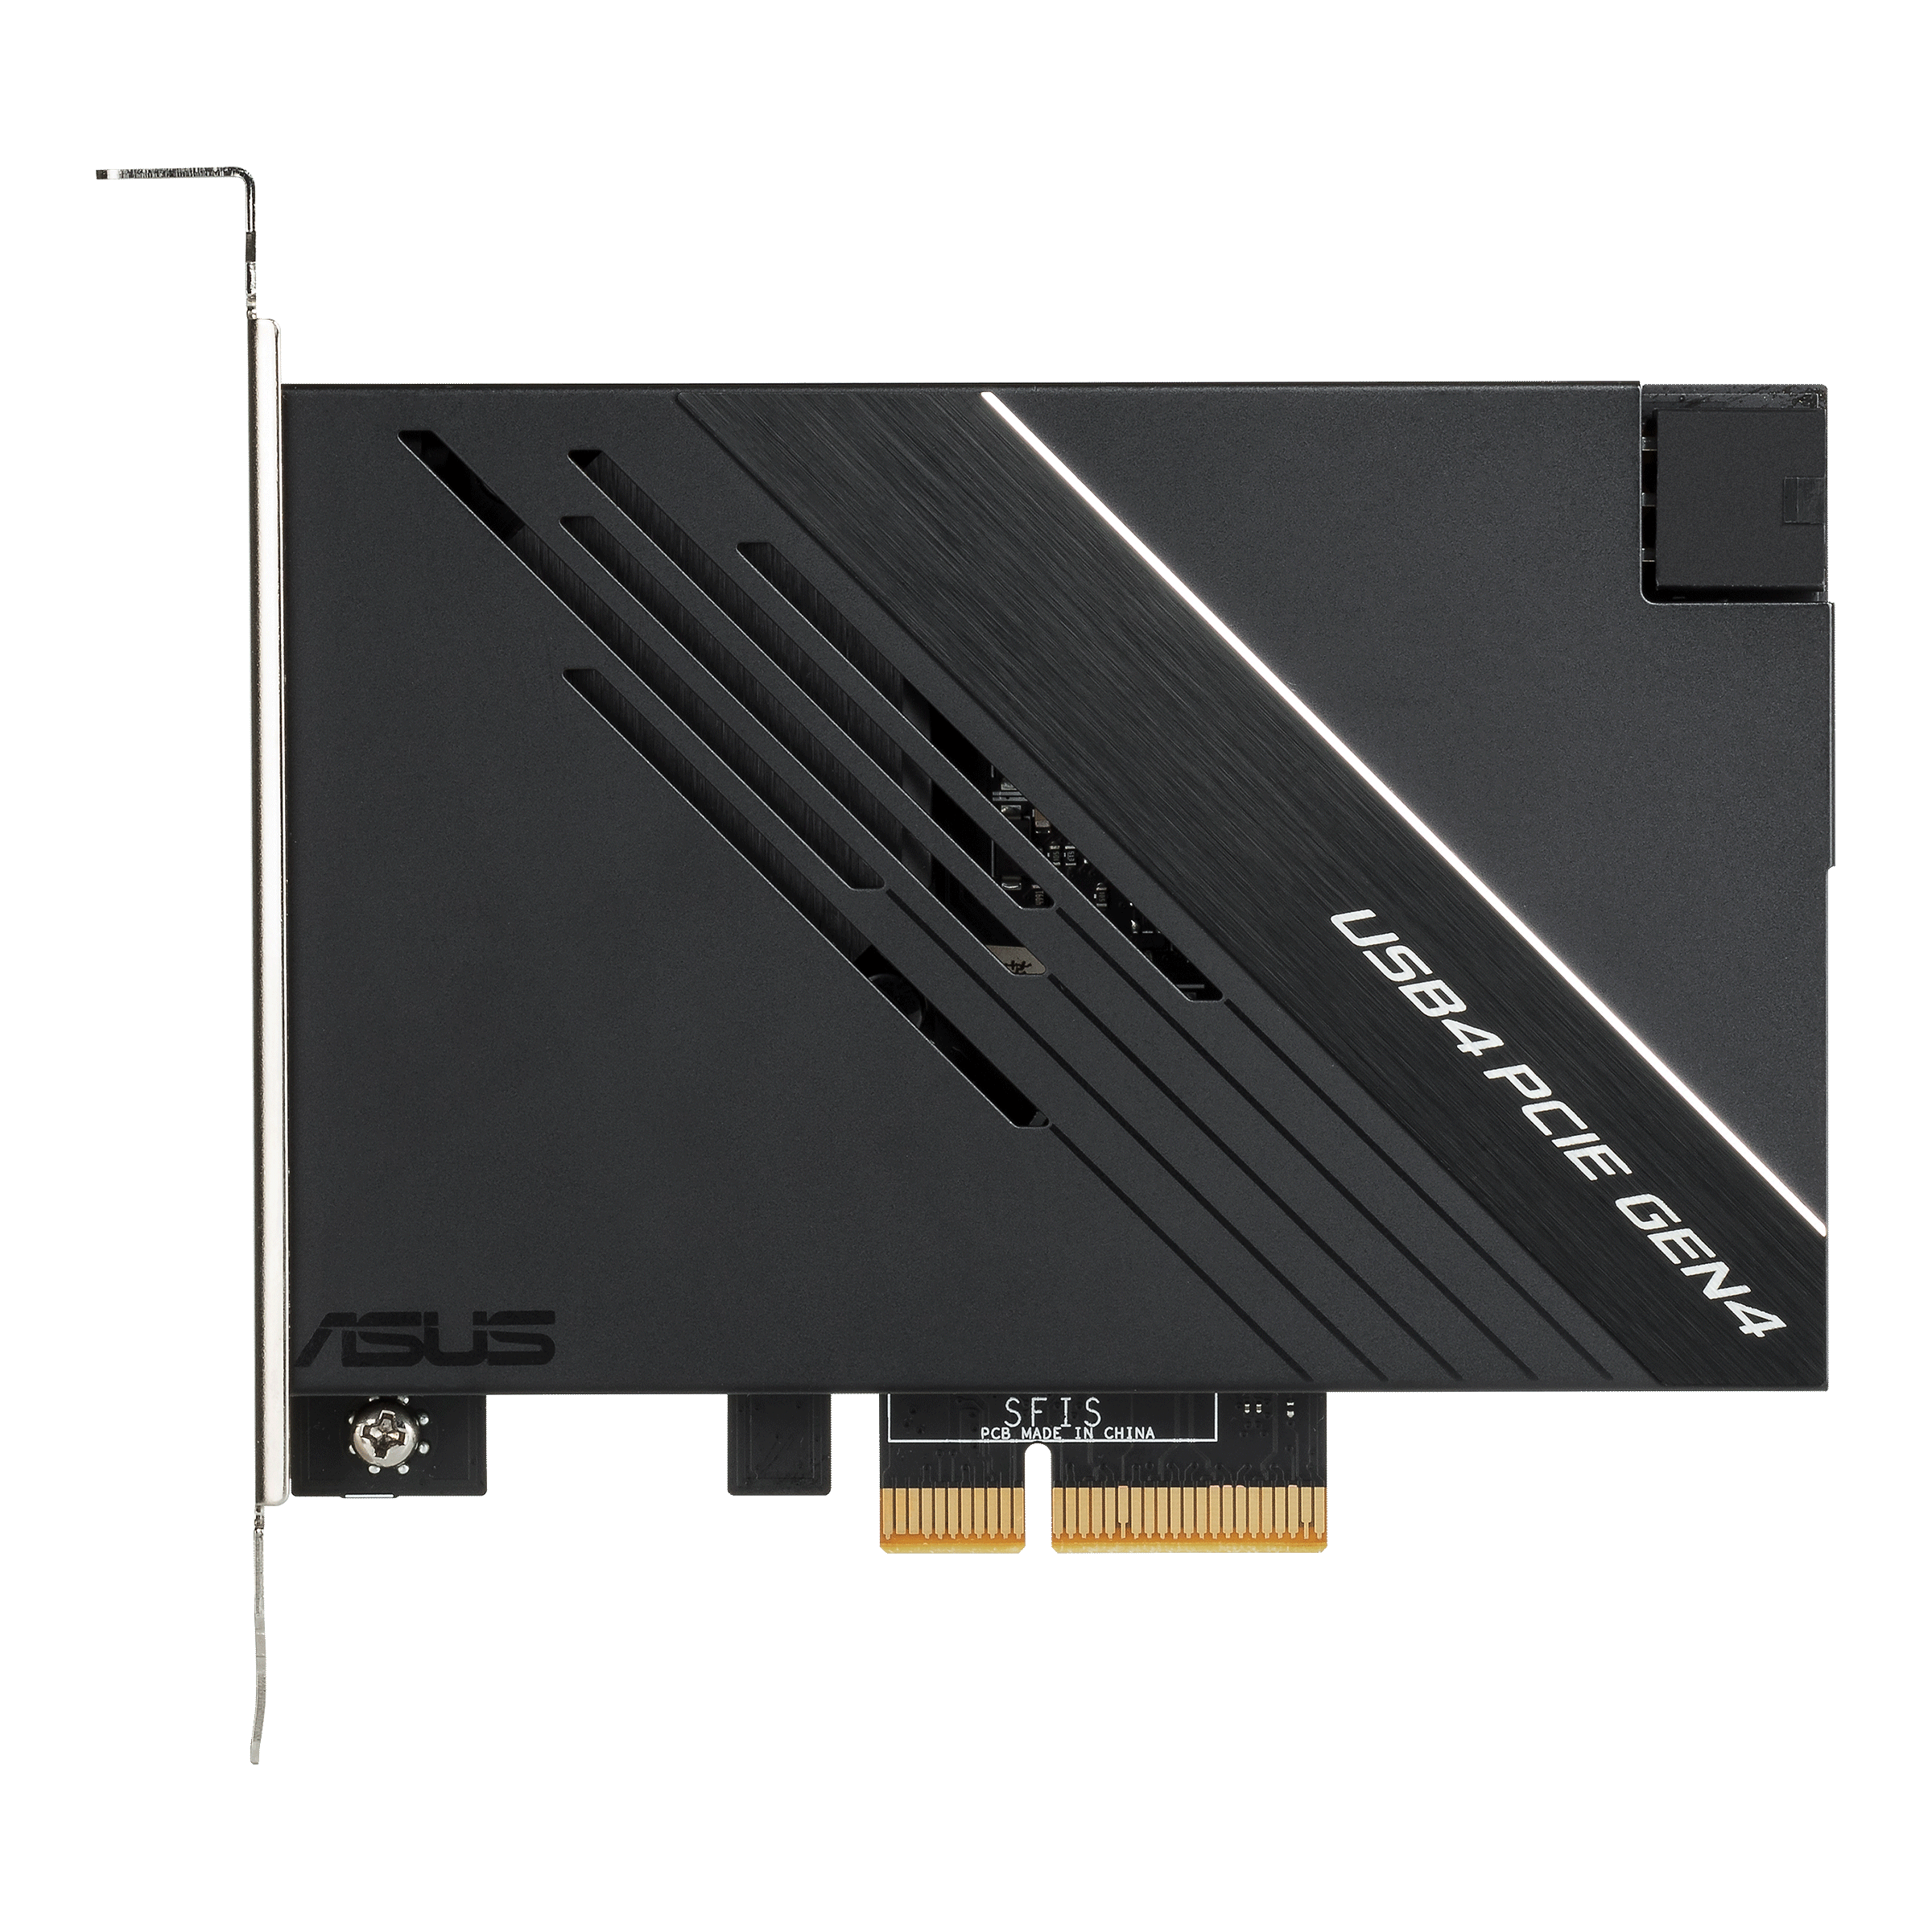 USB4 PCIe Gen4 Card